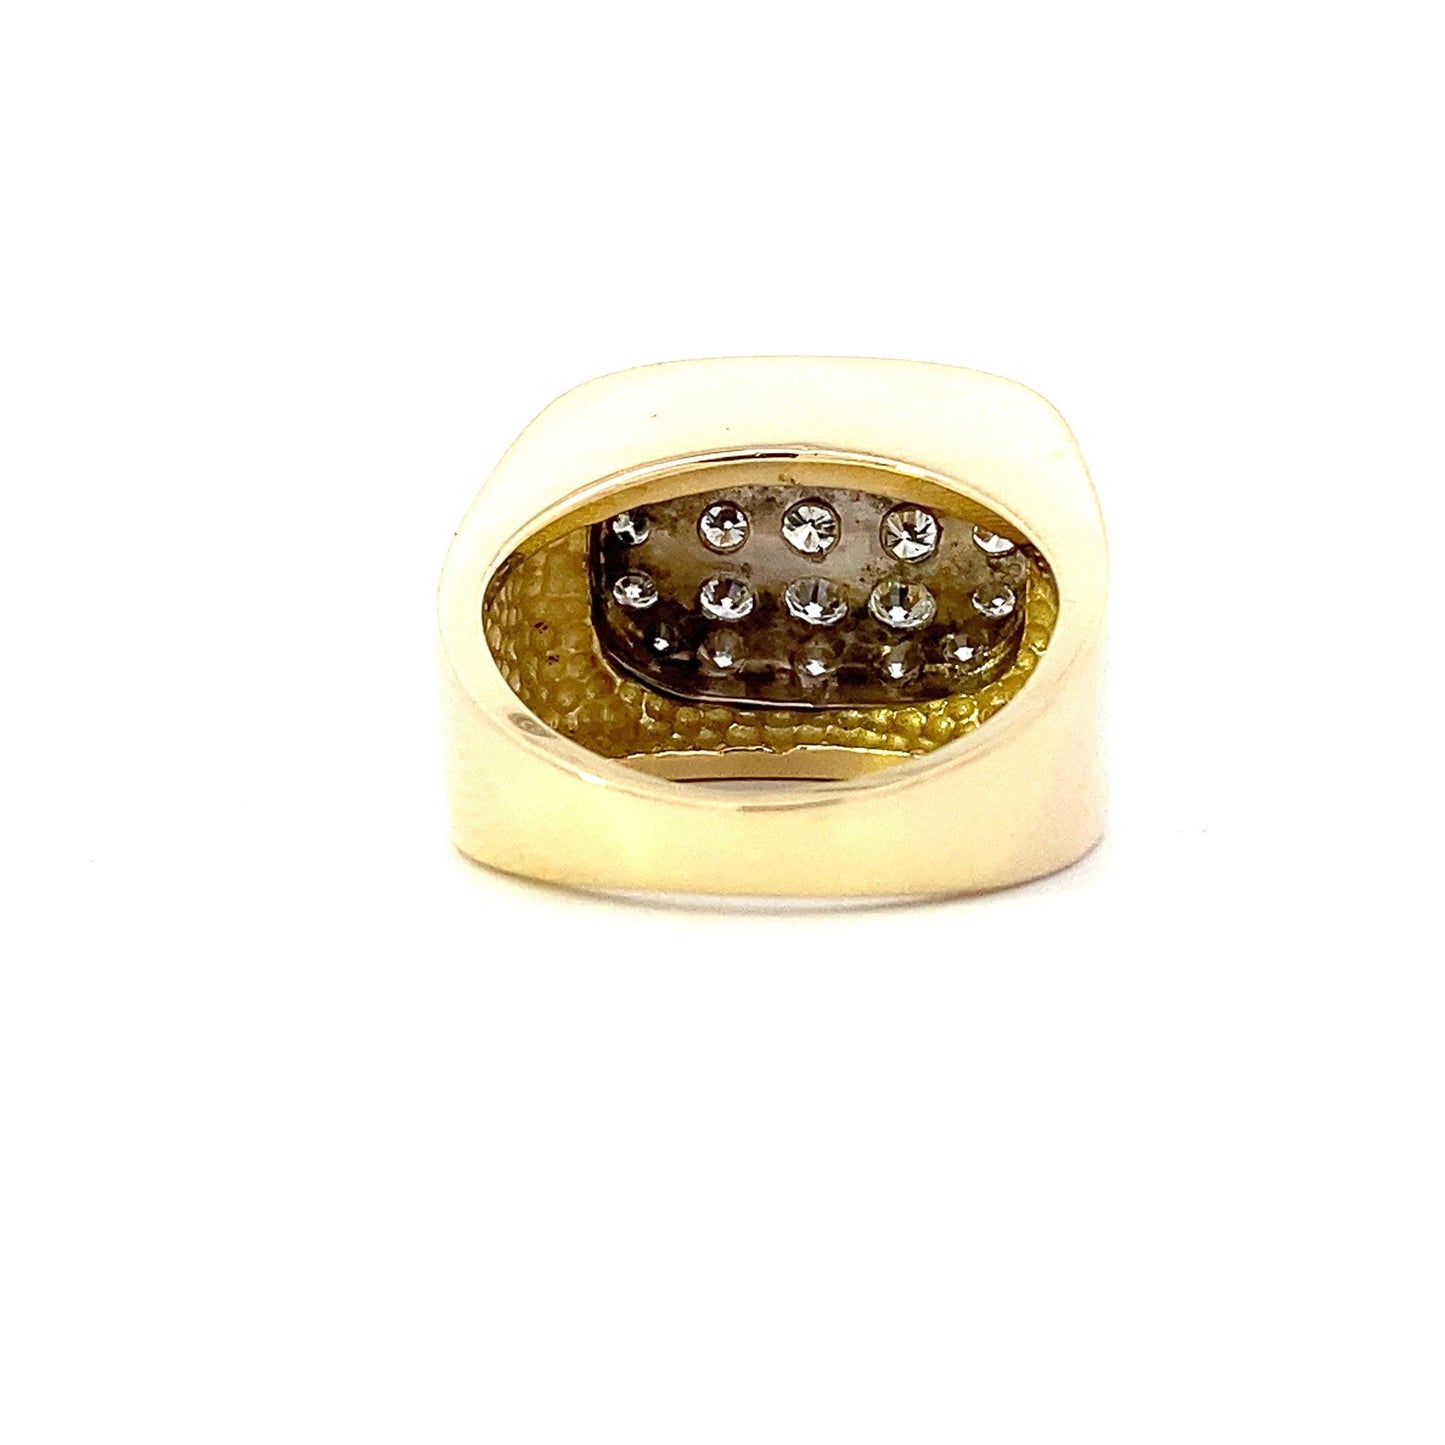 18K Yellow Gold Diamond Pave Ring - 1.41ct - ipawnishop.com